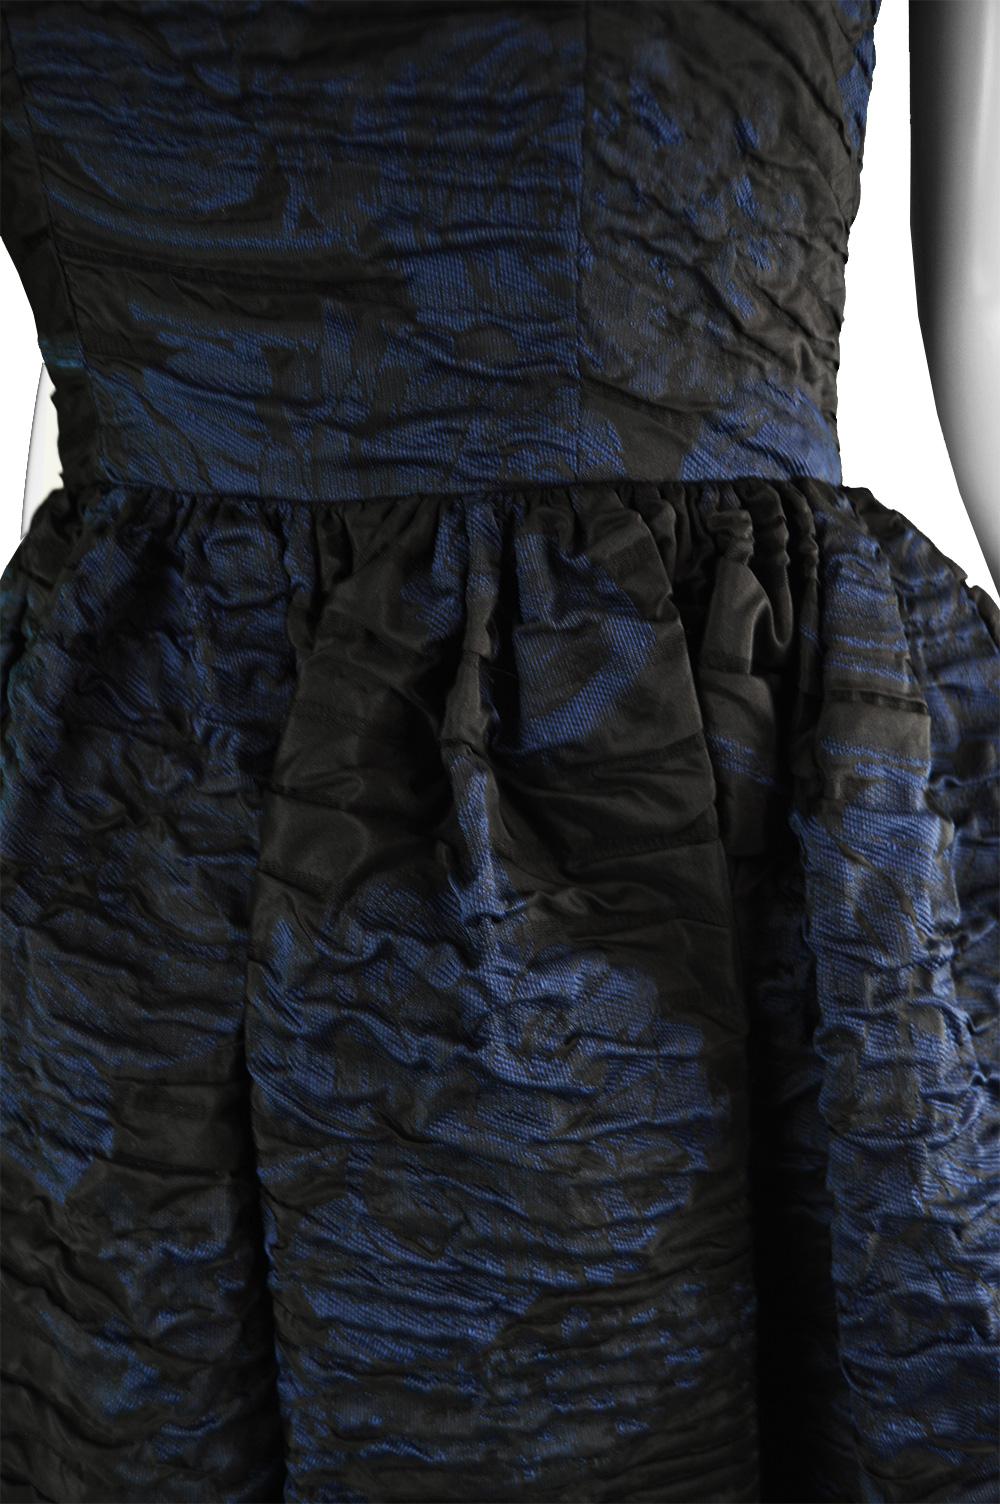 Women's Oscar de la Renta Blue & Black Textured Silk Blend Evening Party Dress, 2010 For Sale